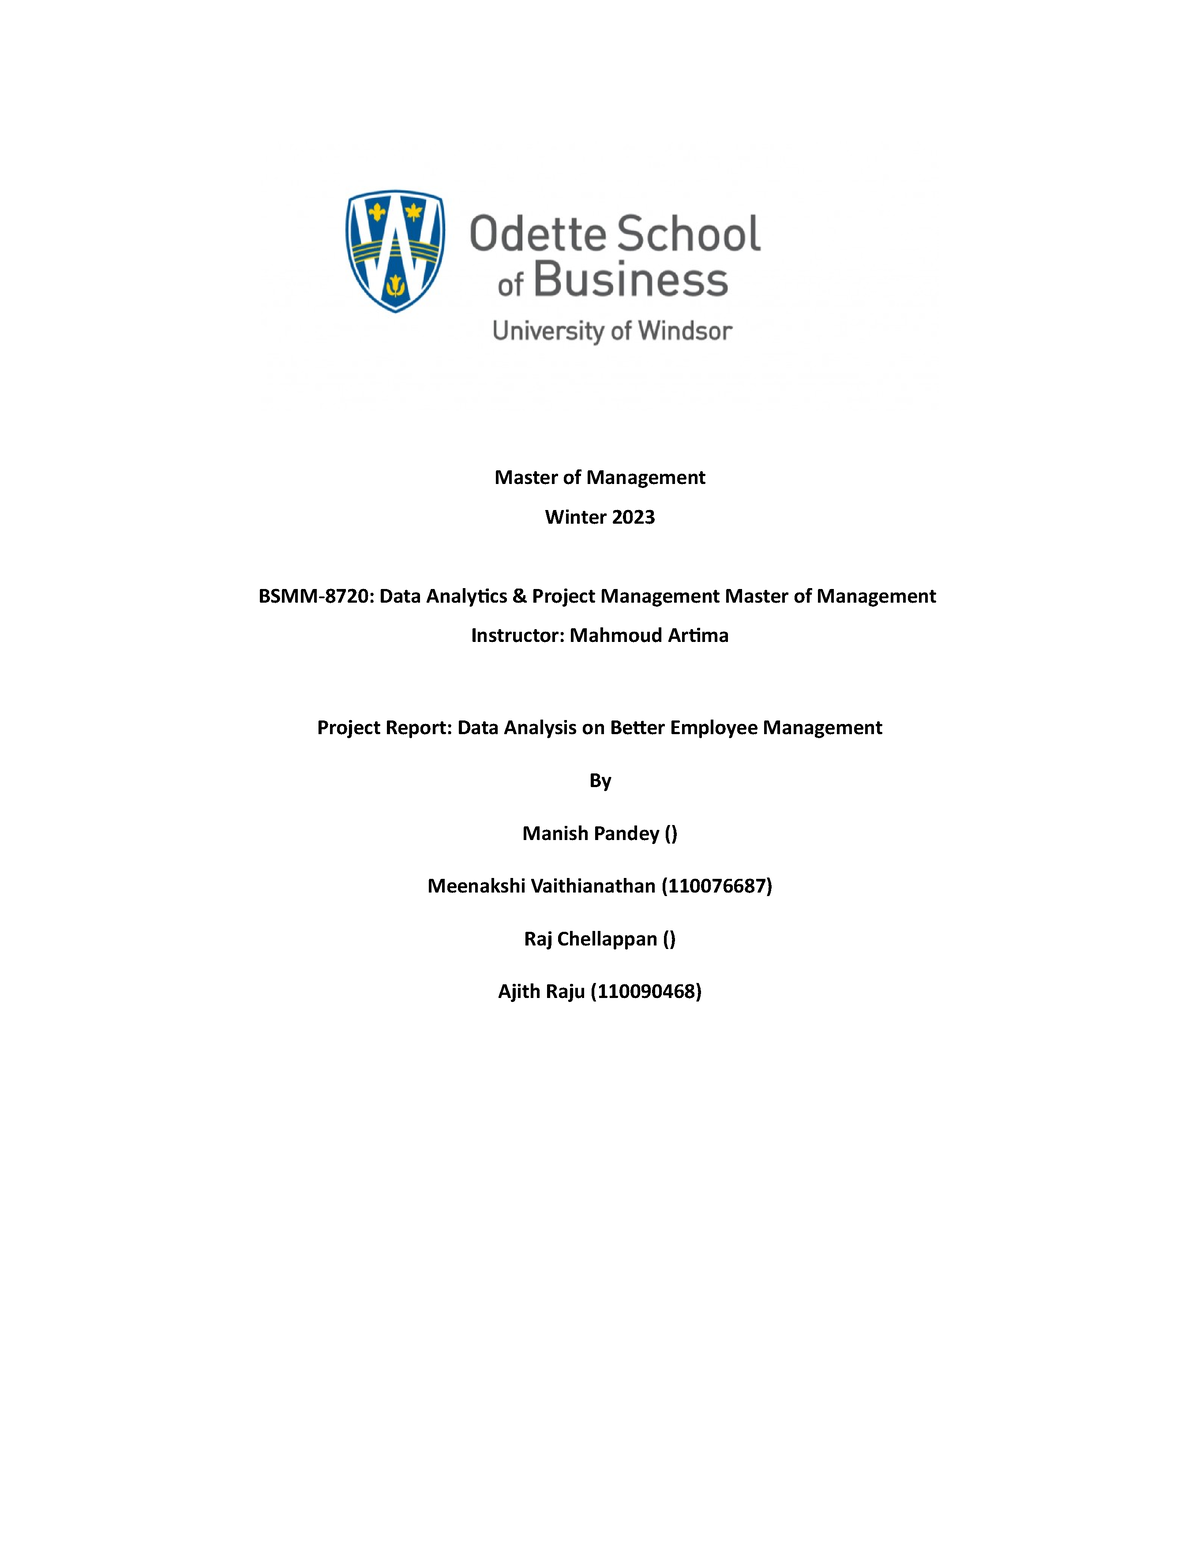 DAPM Project Report - hki - Master of Management Winter 2023 BSMM-8720 ...